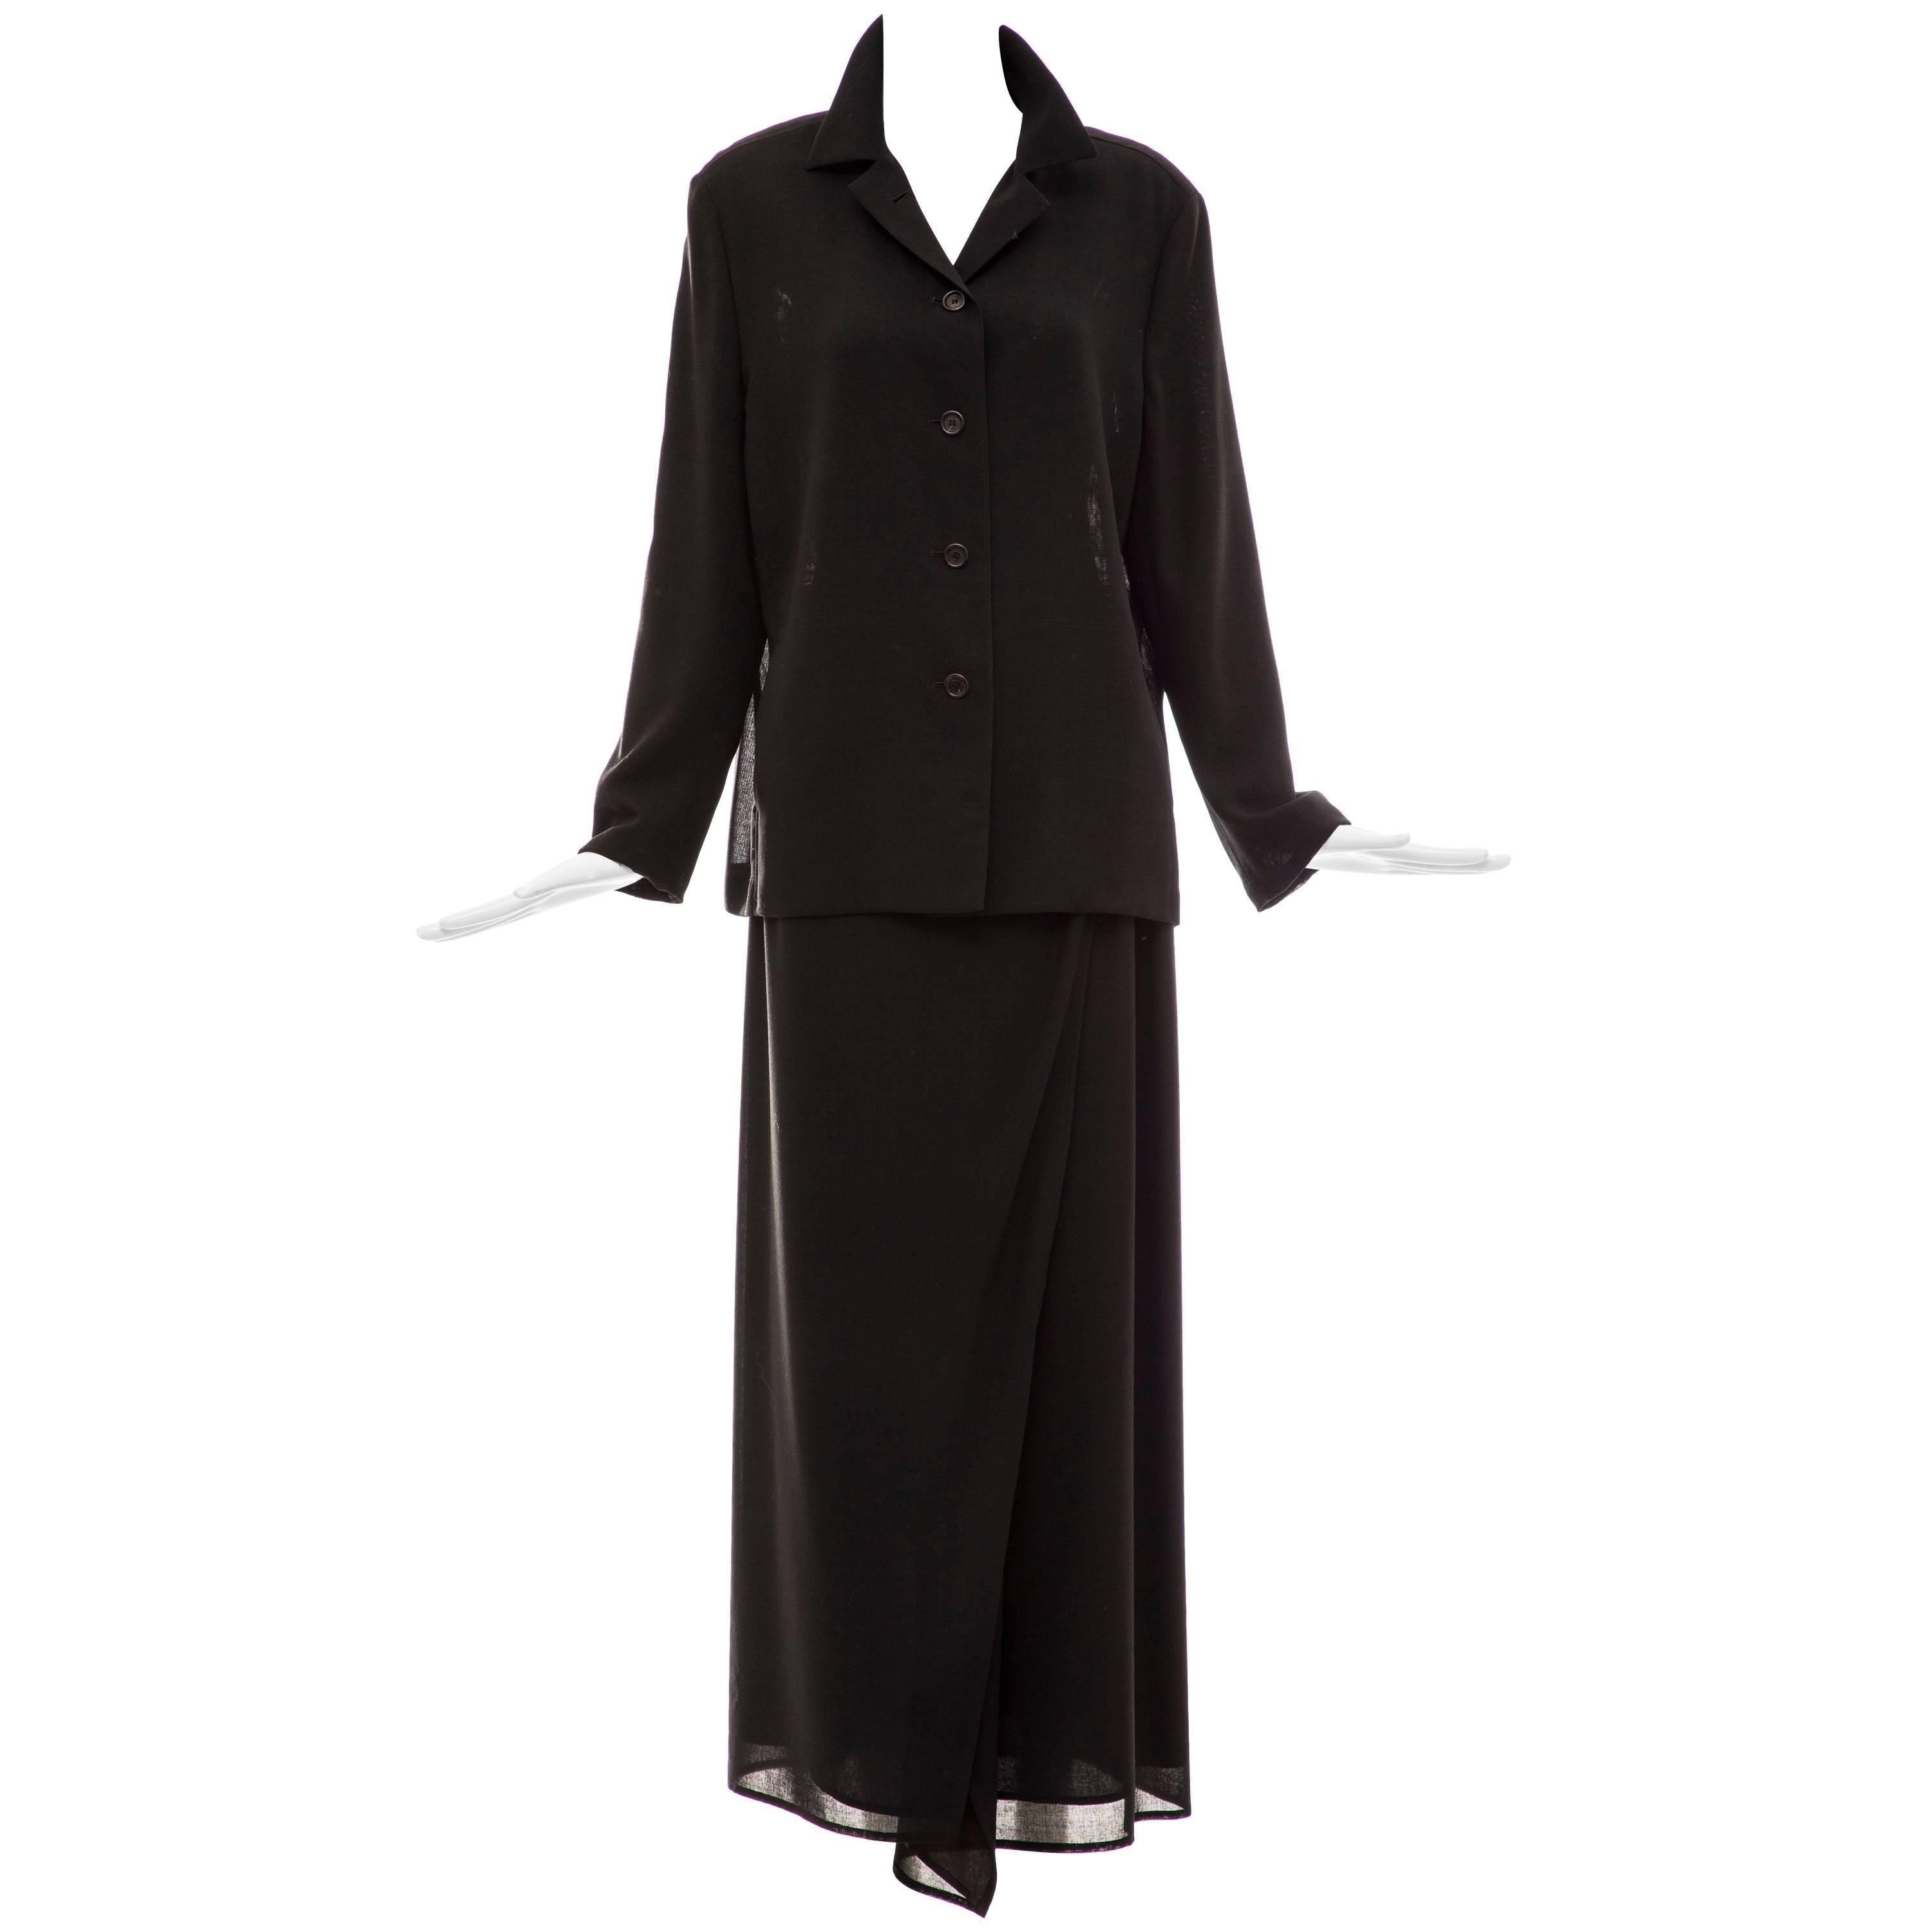 Cerruti 1881 Black Lightweight Wool Gauze Skirt-Suit, Circa 1990's For Sale